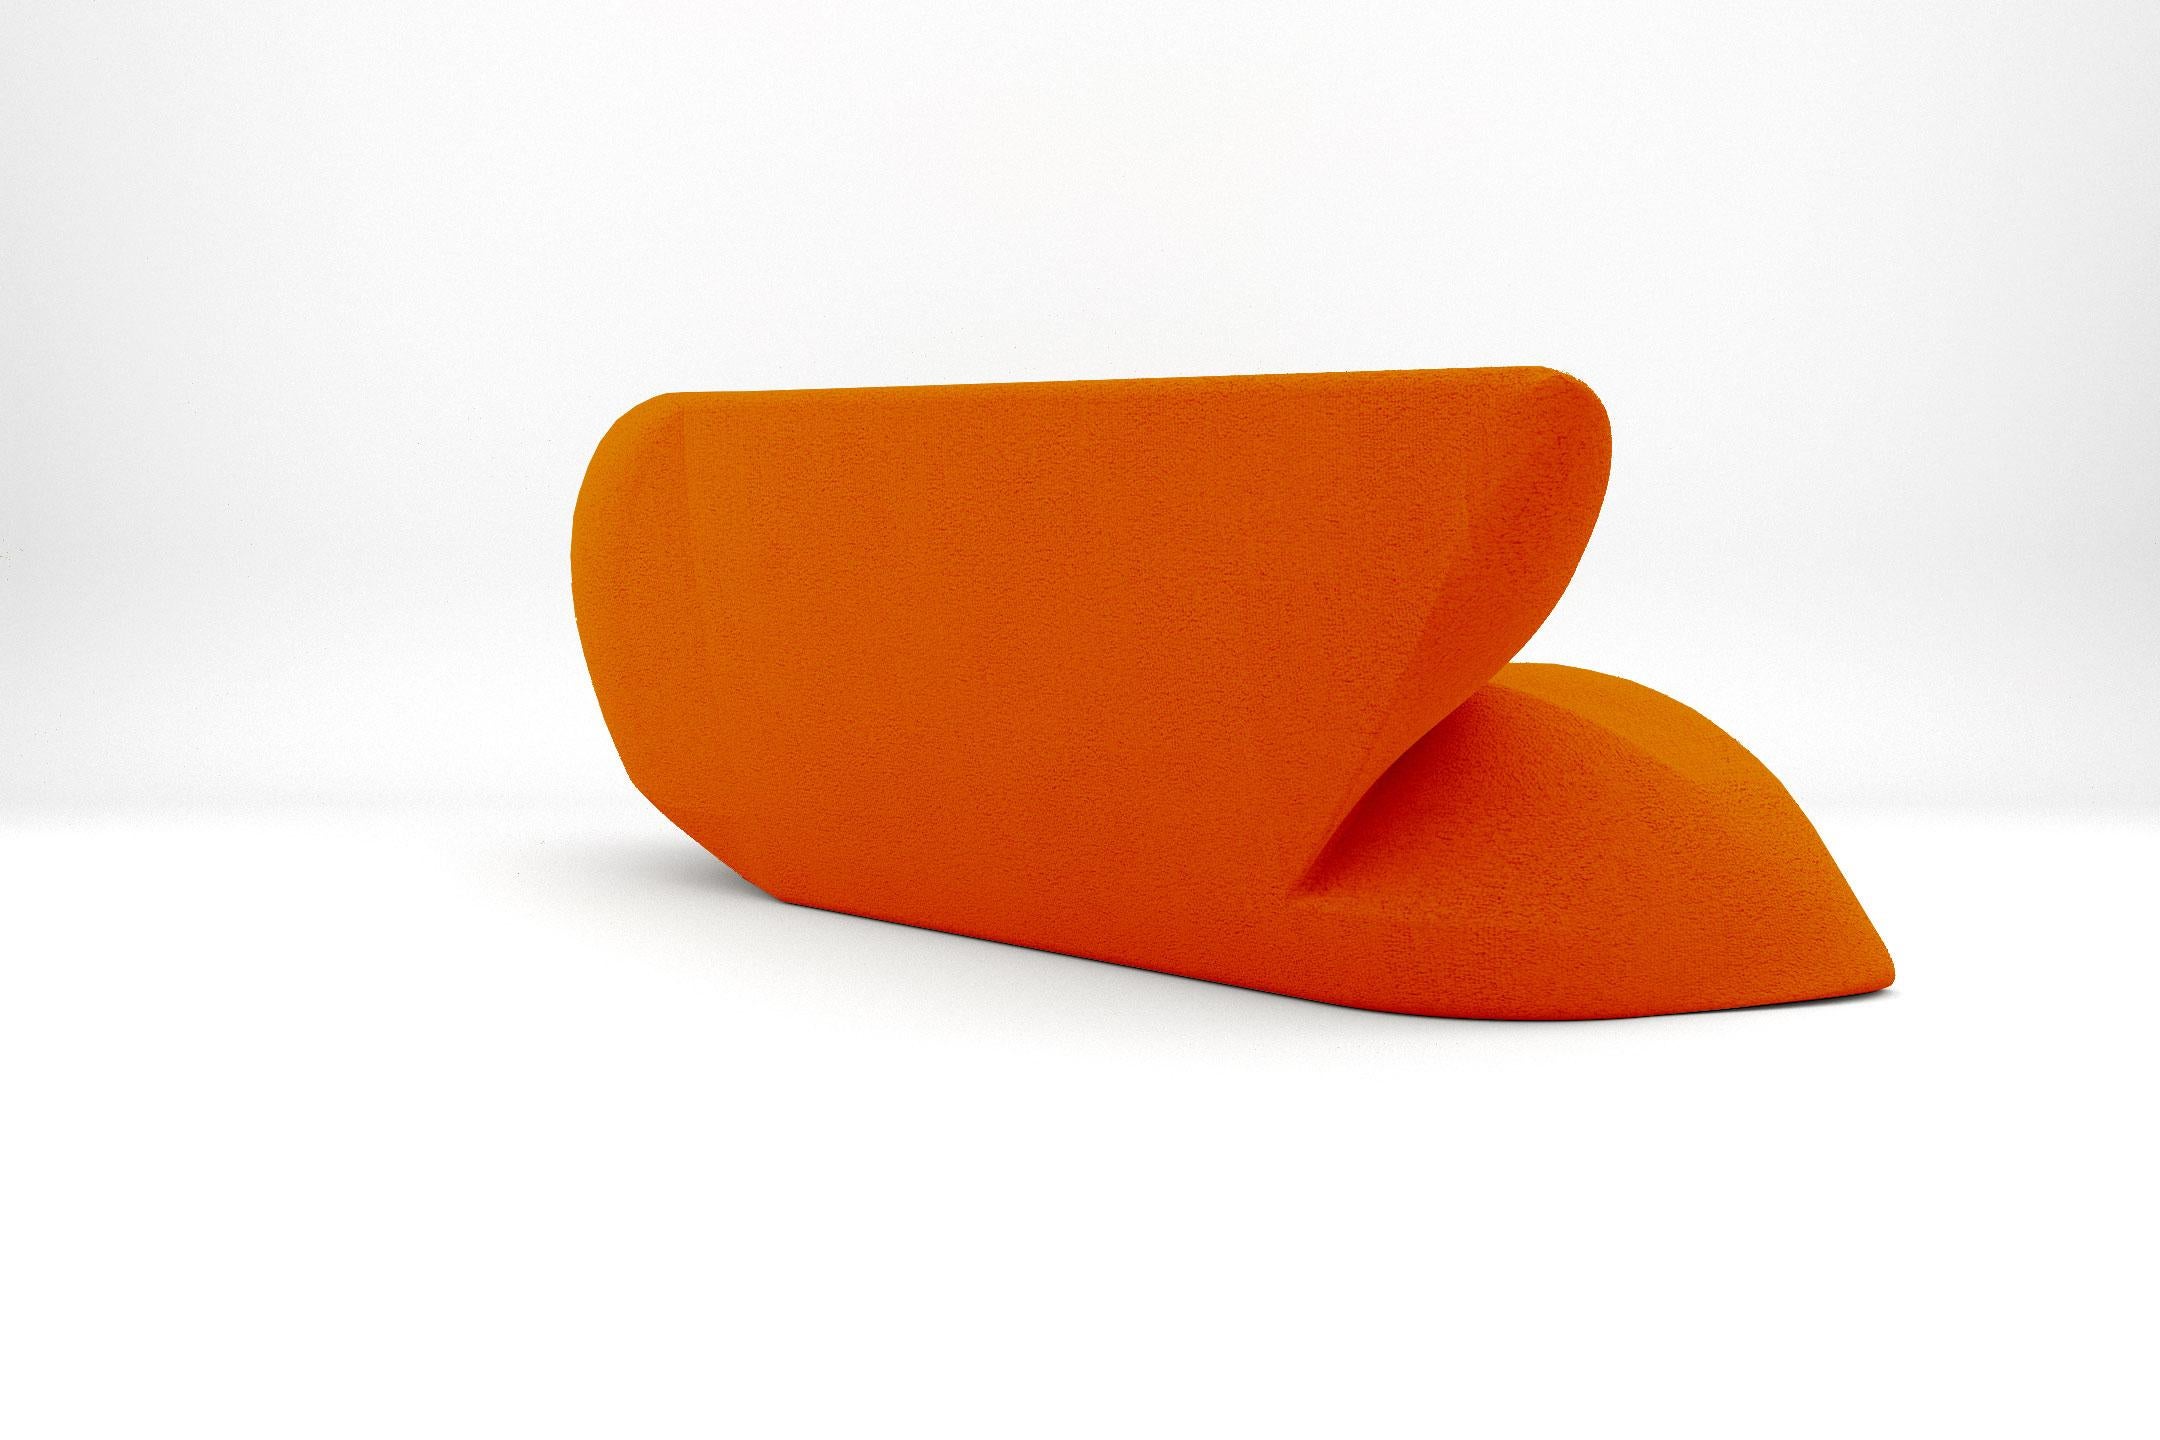 European Delta Sofa - Modern Tangerine Orange Upholstered Three Seat Sofa For Sale